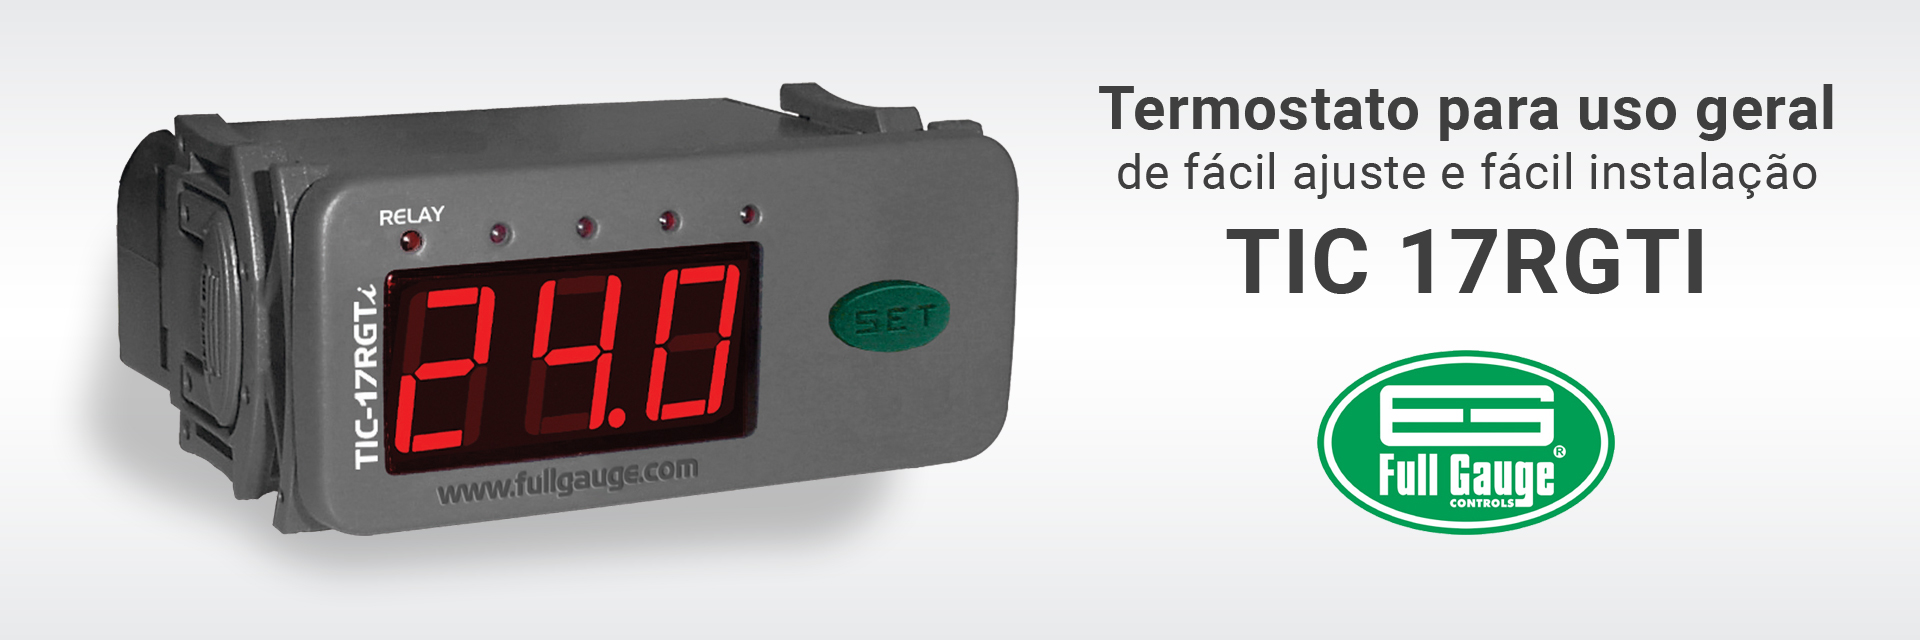 Termostato TIC 17RGTI